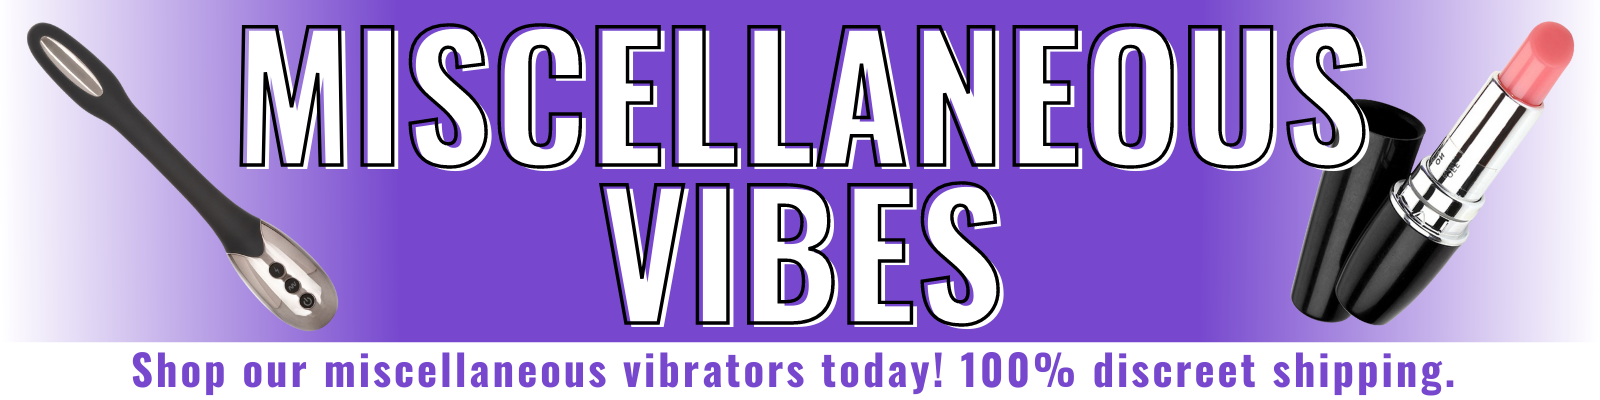 Banner for our miscellaneous vibrators collection. Banner reads: Miscellaneous vibes. Shop our miscellaneous vibrators today! 100% discreet shipping.